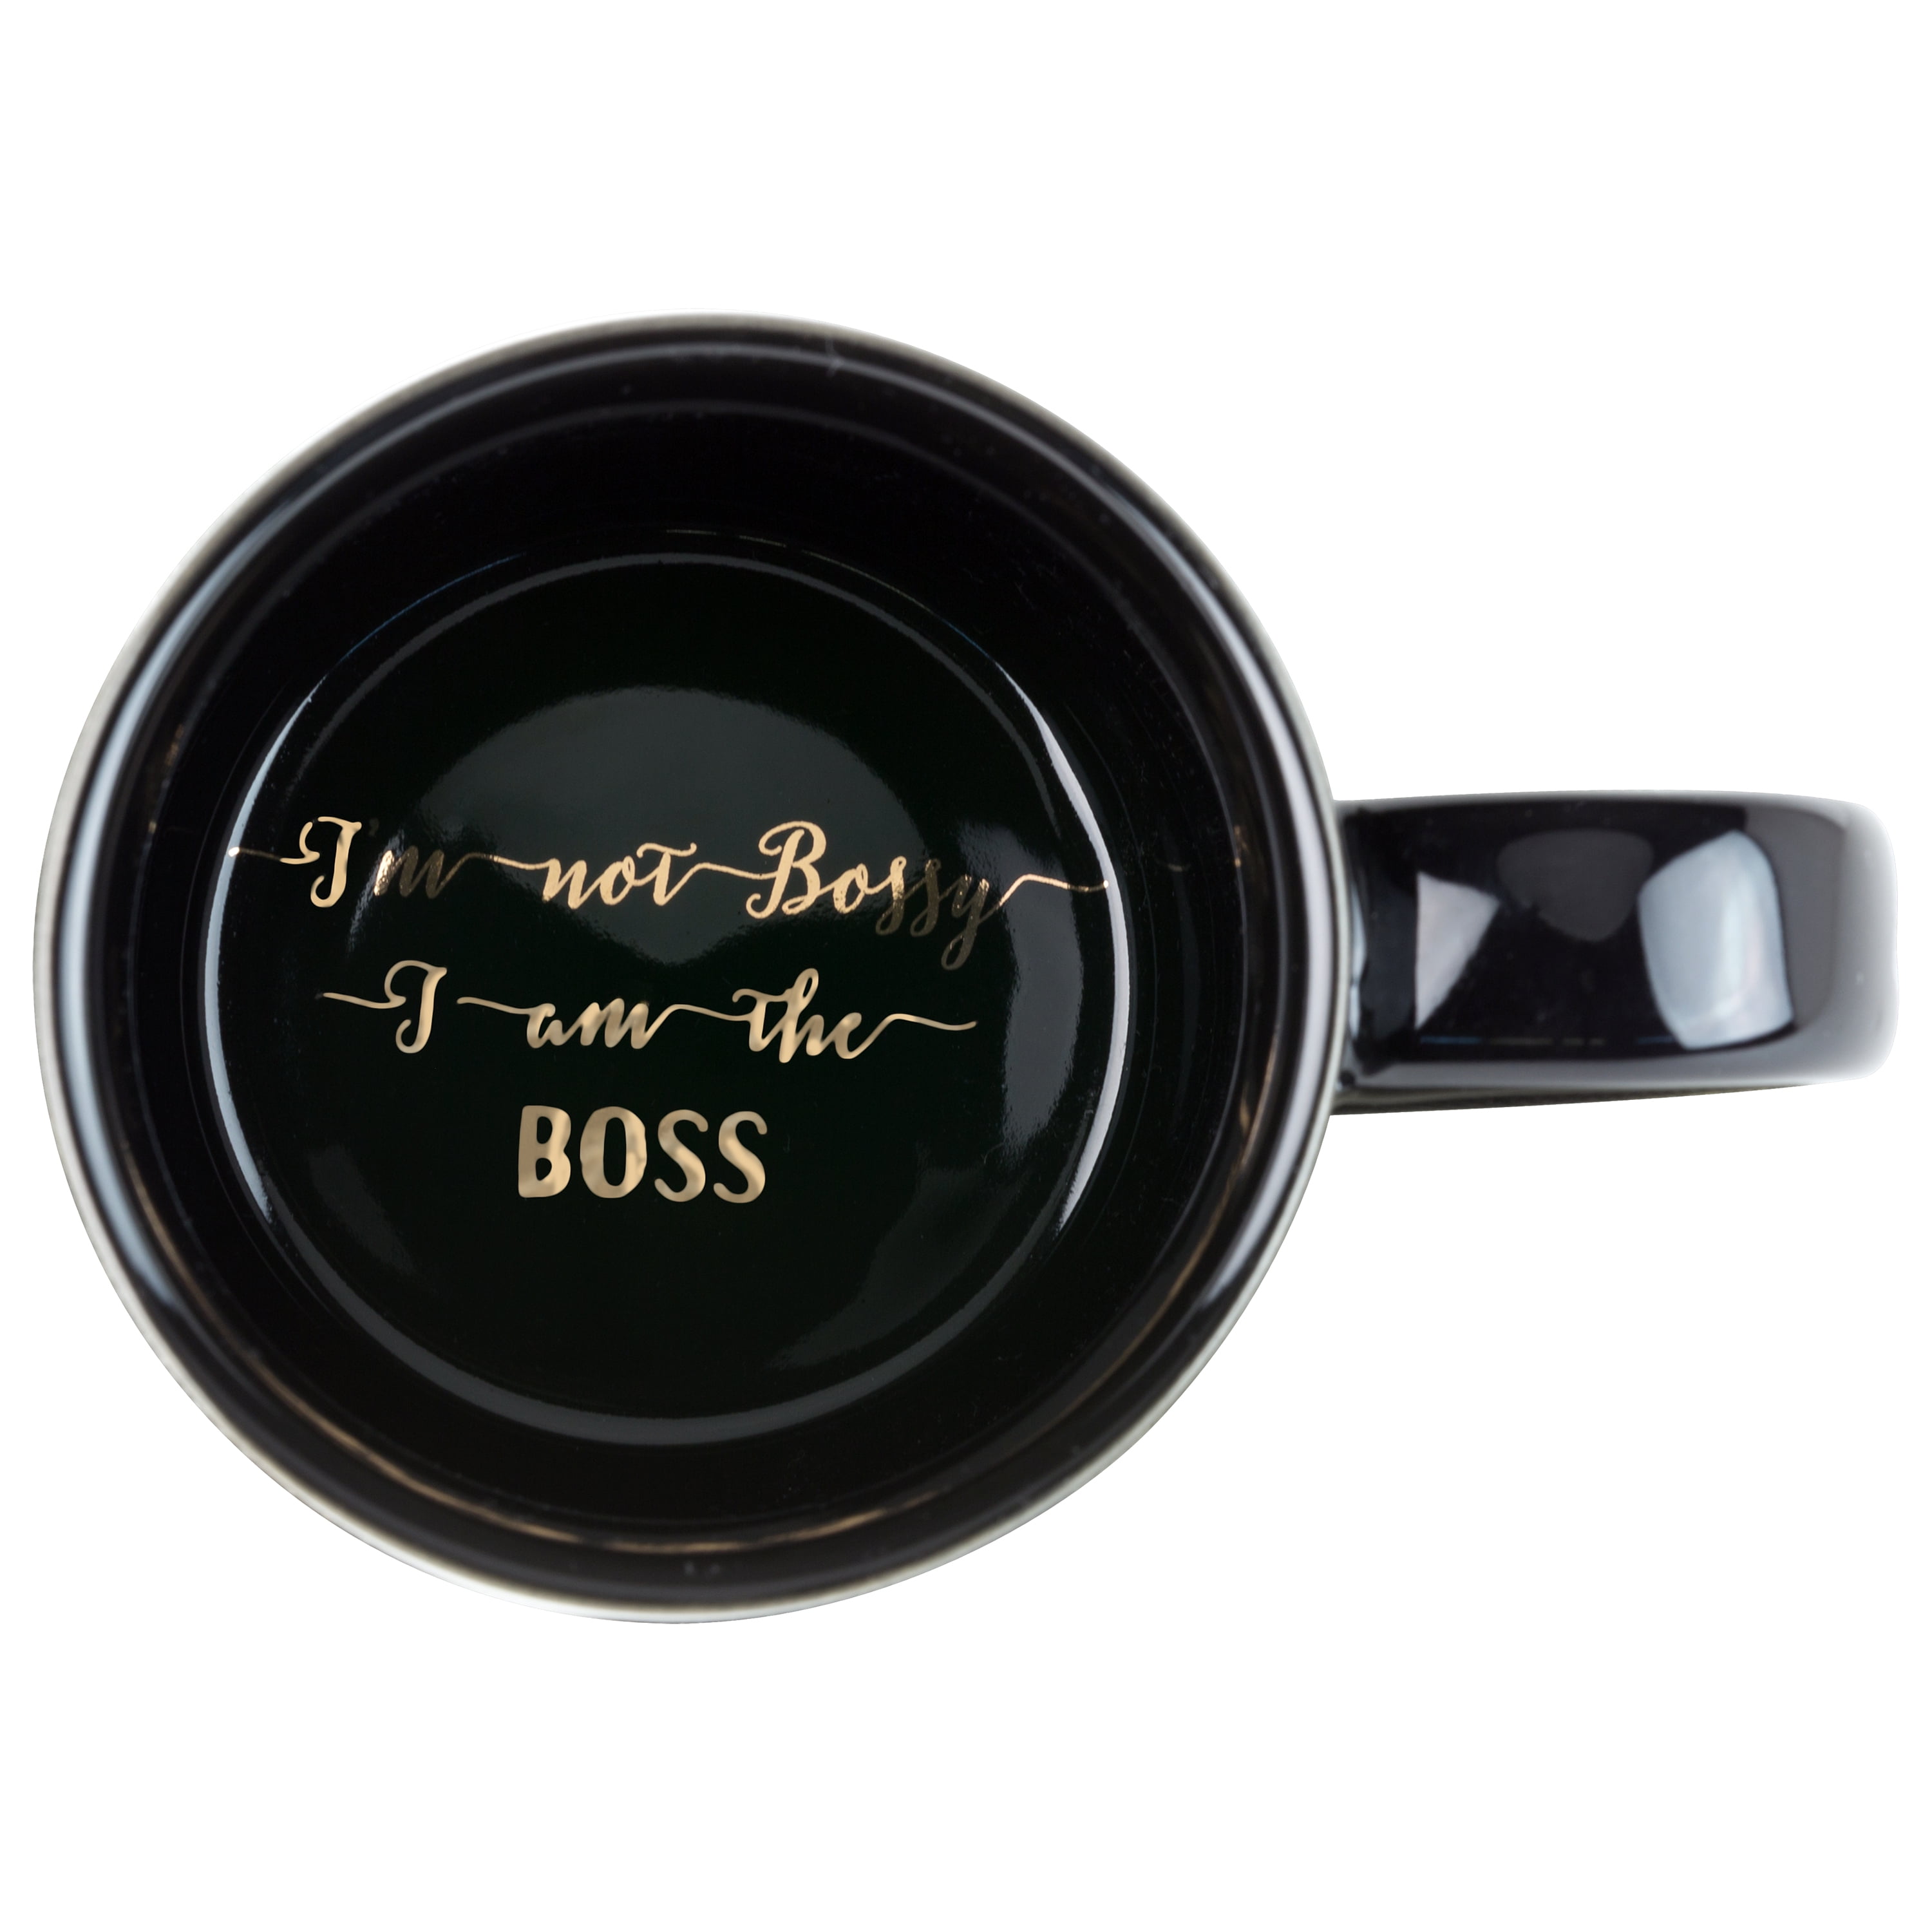 Boss Lady 17.5 oz Mug - Black/Gold